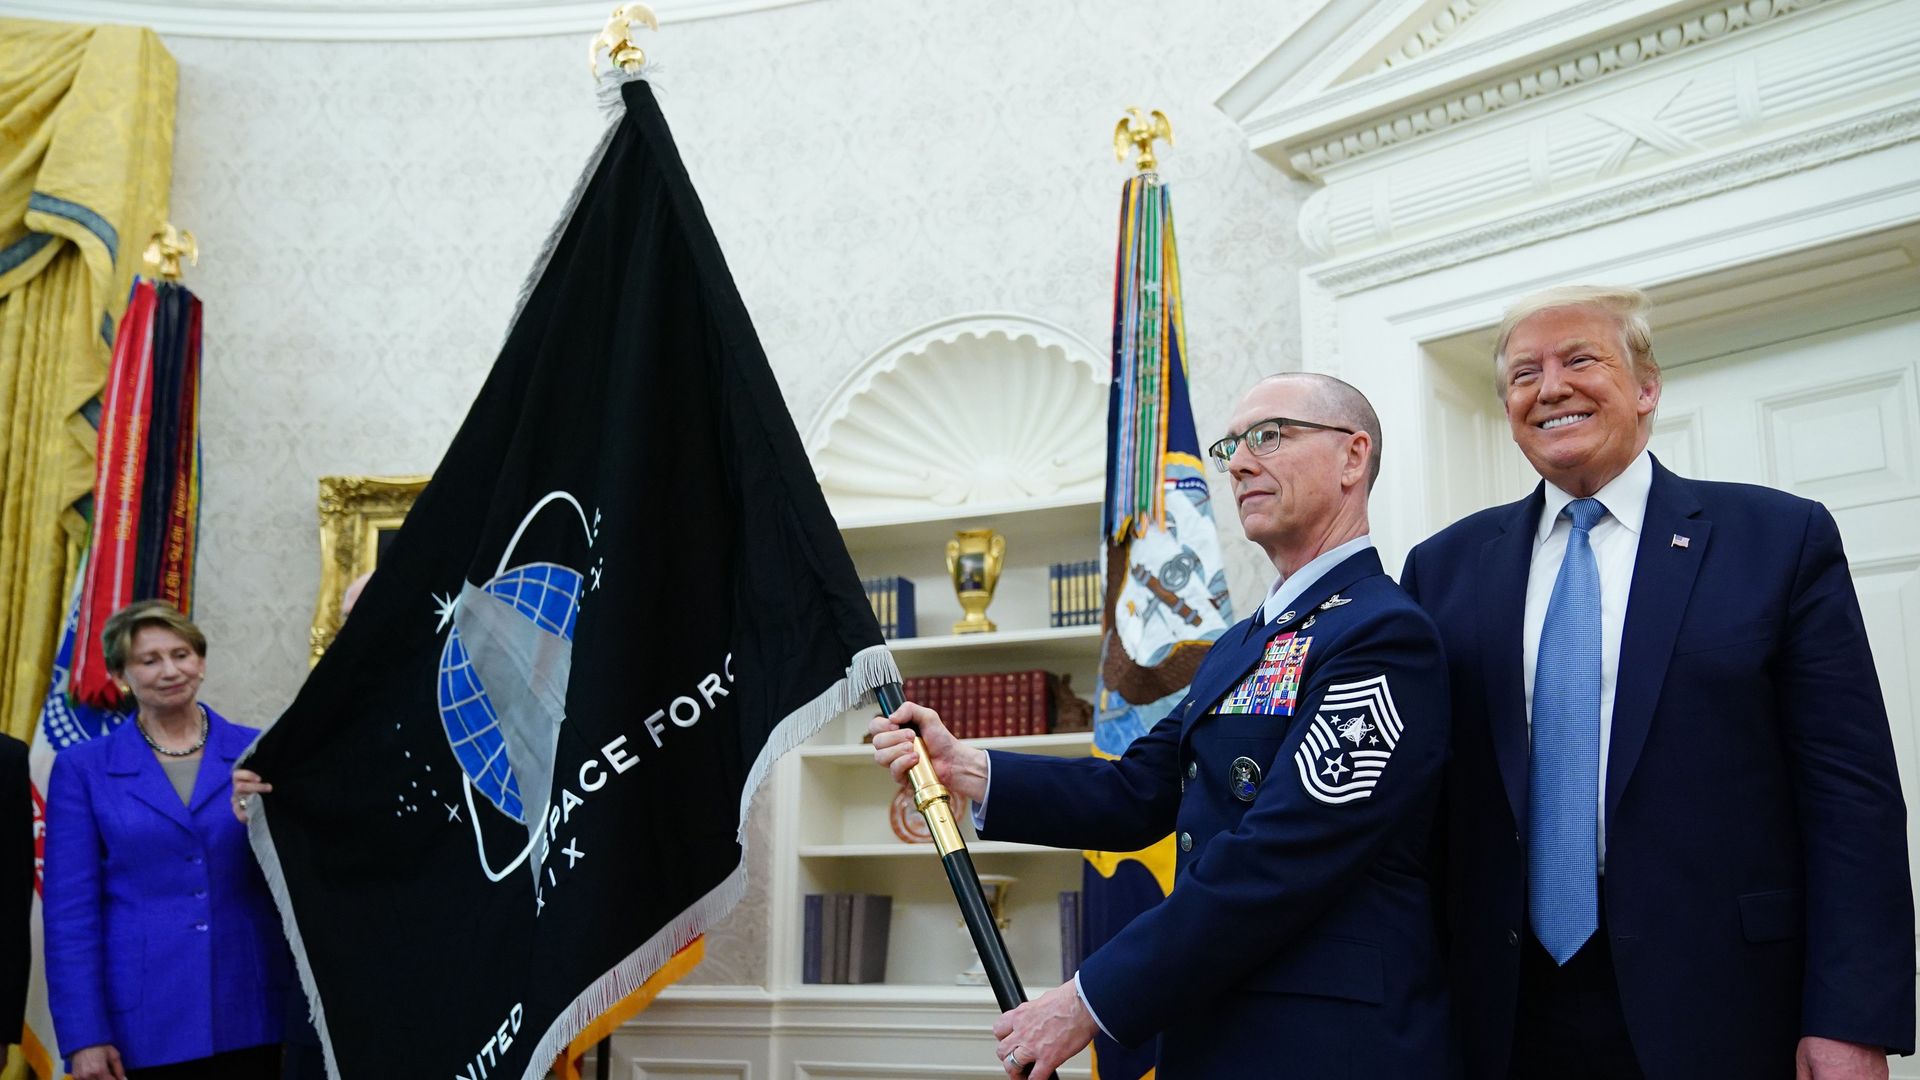 Former President Trump with U.S. Space Force Senior Enlisted Advisor CMSgt Roger Towberma.